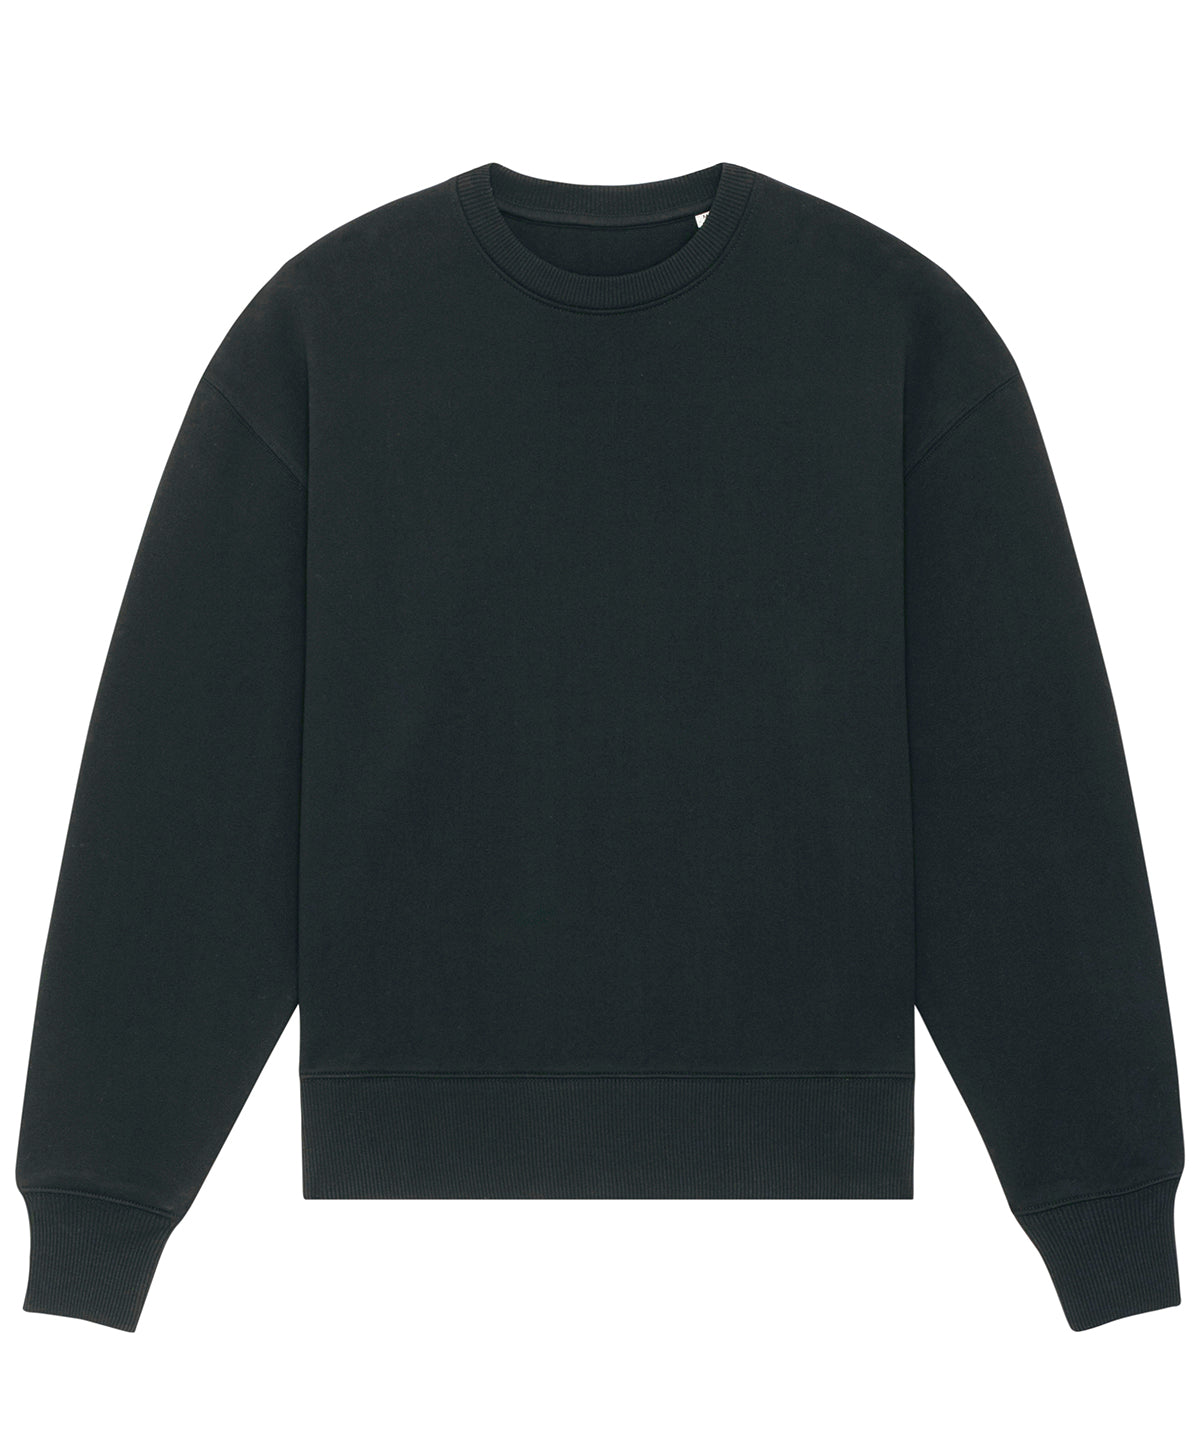 Buy 100% Cotton Black Crewneck, Mens Heavyweight Sweatshirts